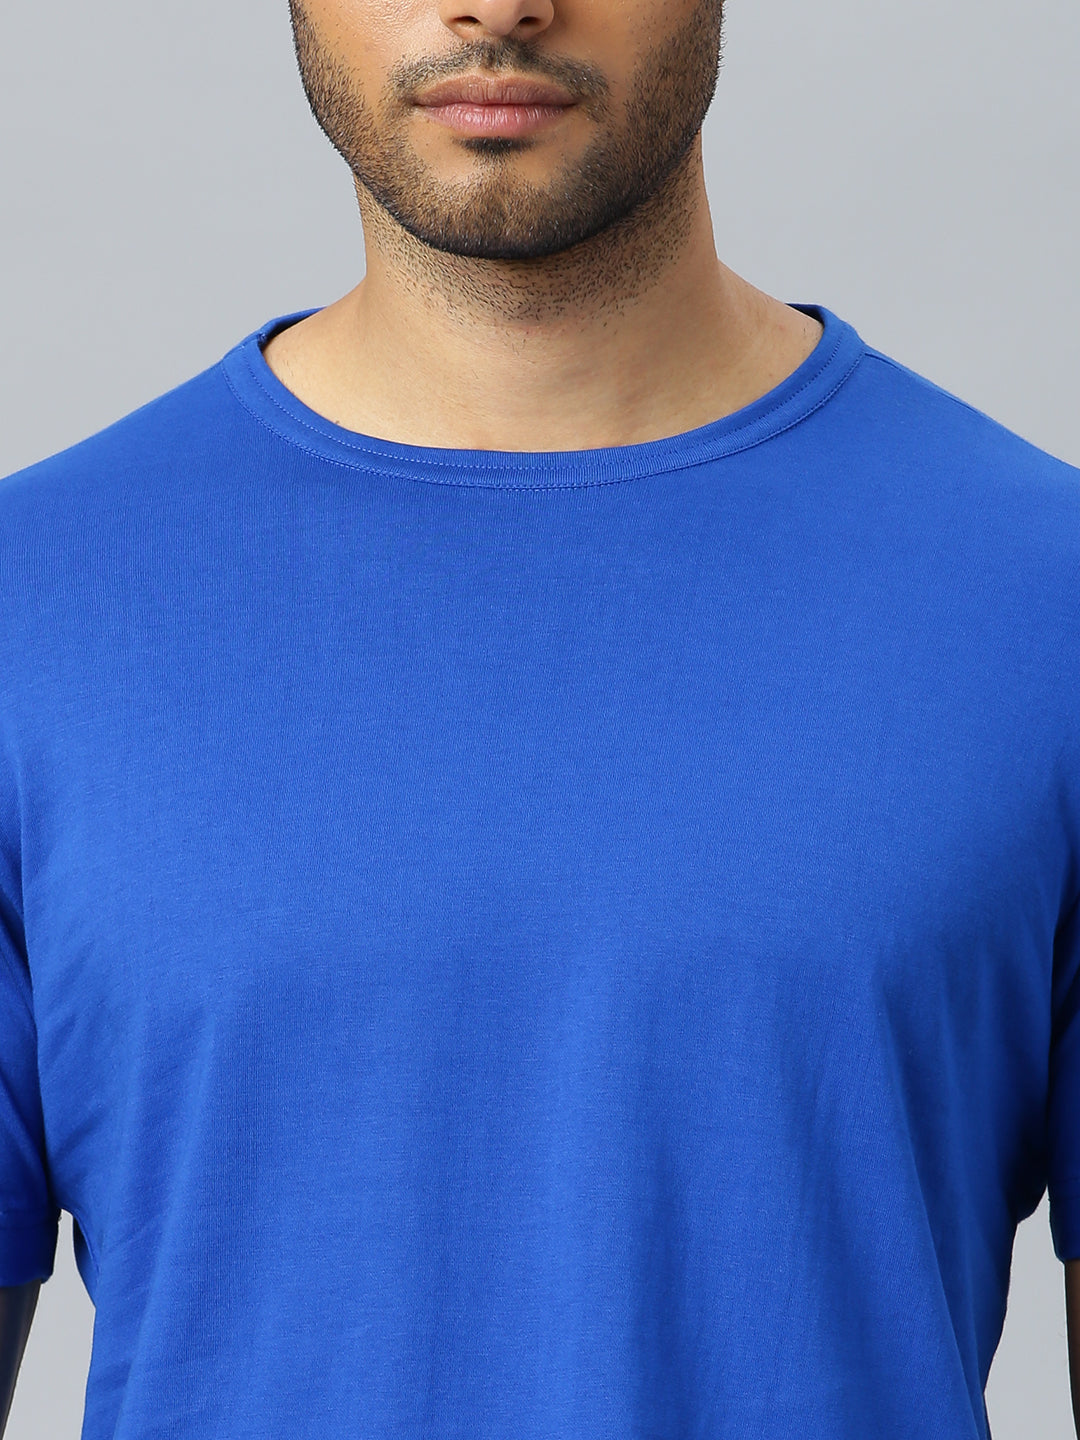 Don Vino Men's Solid Royal Blue Crew Neck T-Shirt